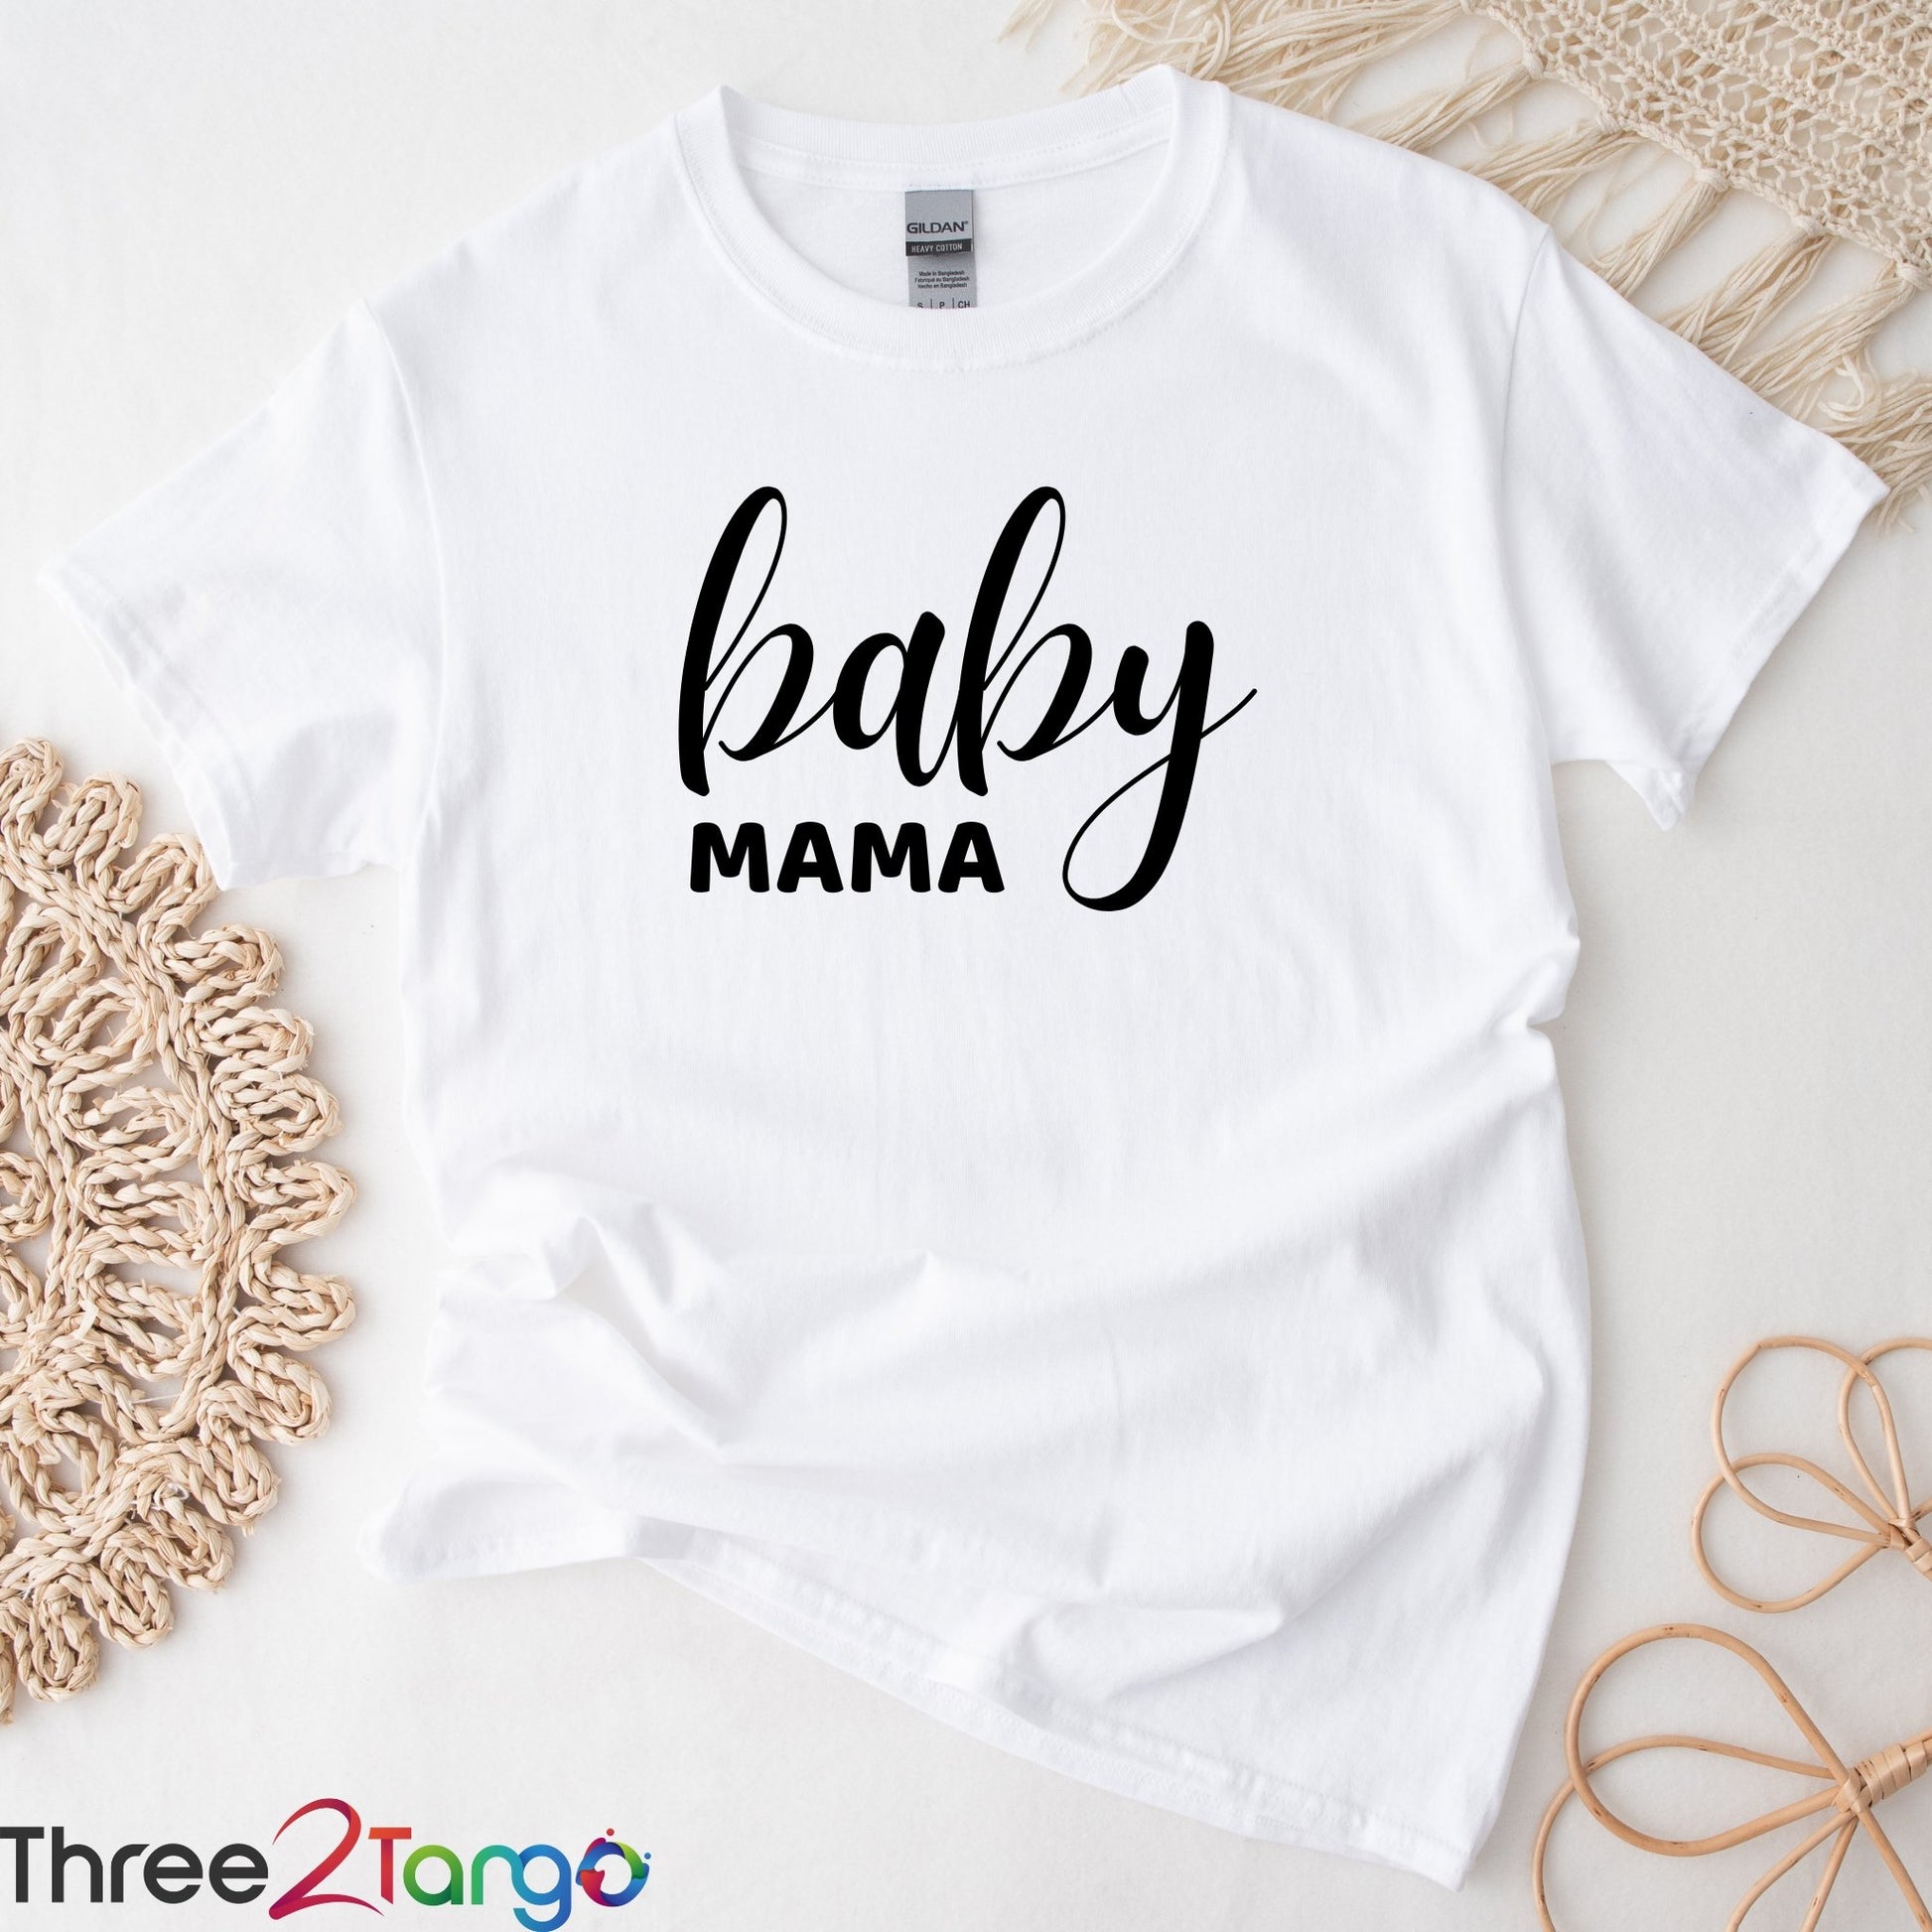 BABY MAMA - Three2Tango Tee's